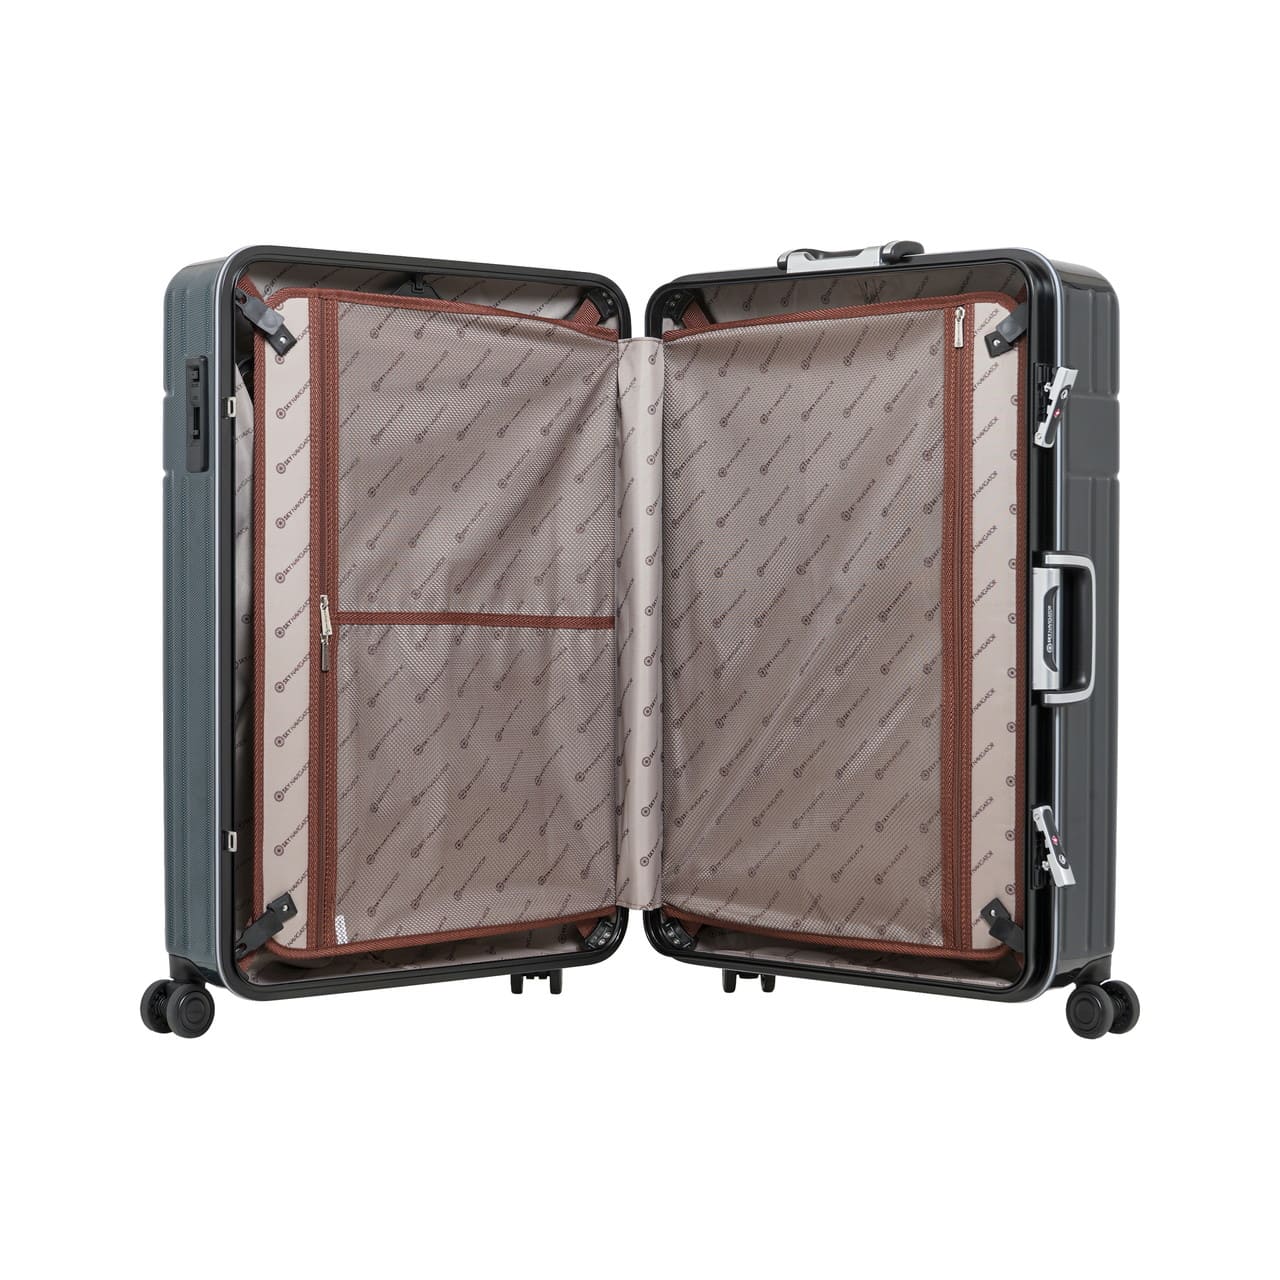 SKYNAVIGATORのスーツケースSK-0835-69の内装